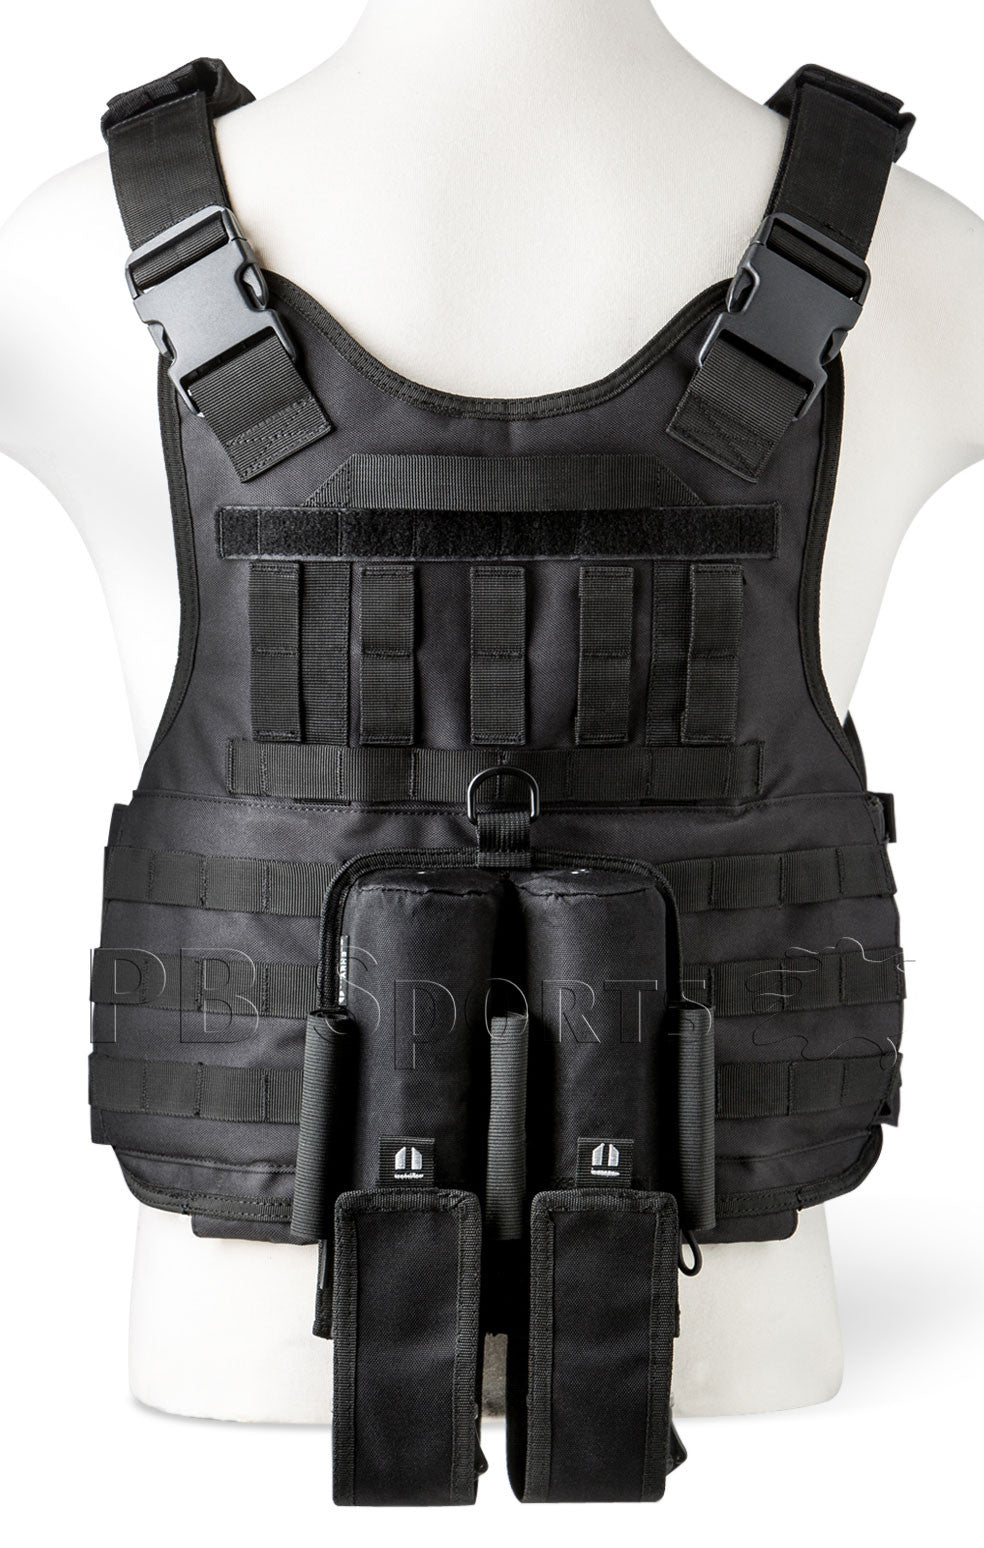 Tiberius Arms EXO Recon Tactical Vest Black - Tiberius Arms